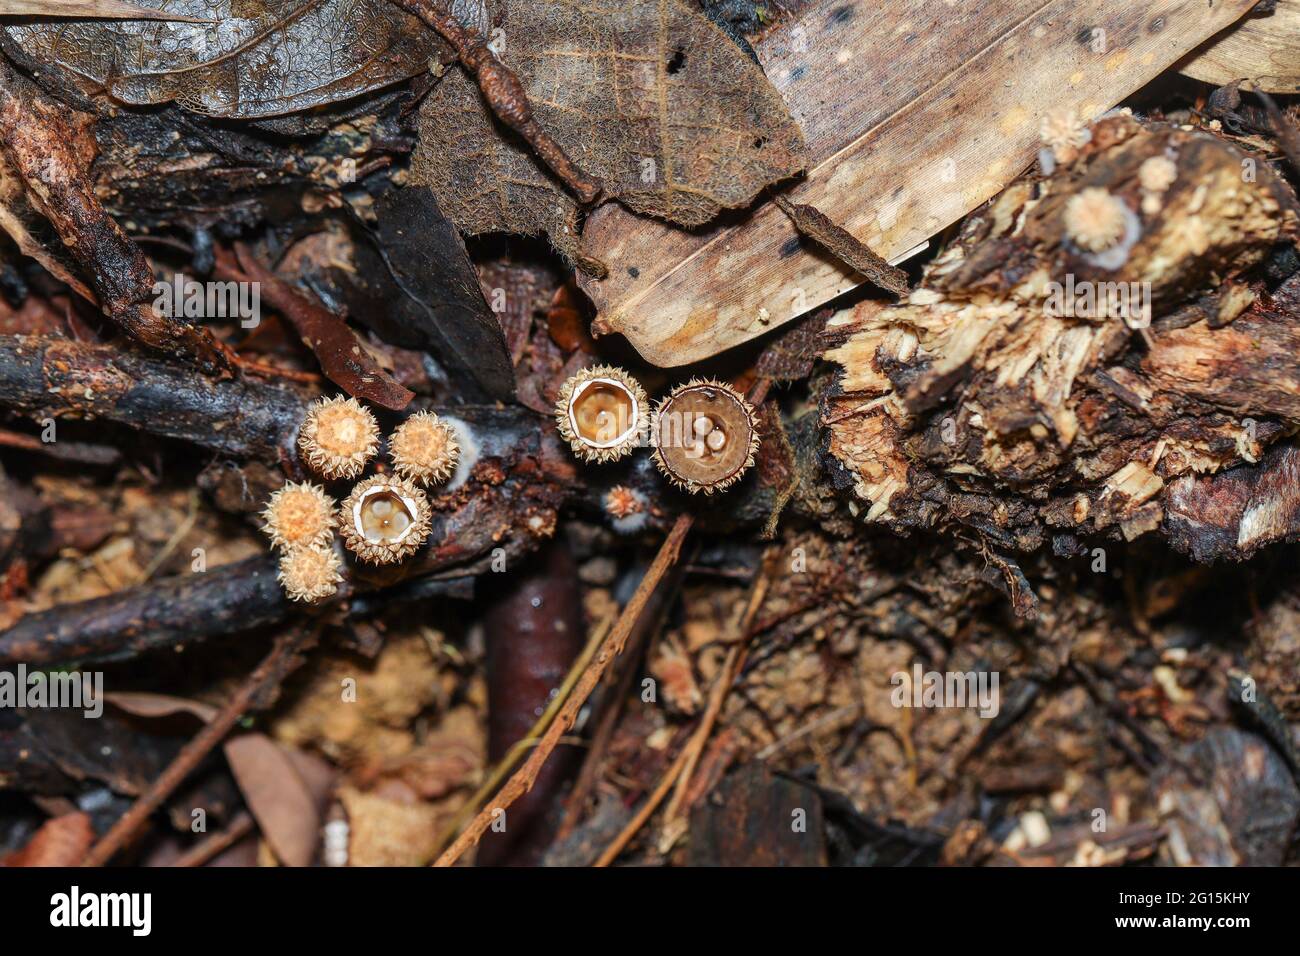 A cluster of bird's nest fungi, Crucibulum laeve from Nidulariaceae family growing on a decaying tree trunk Stock Photo